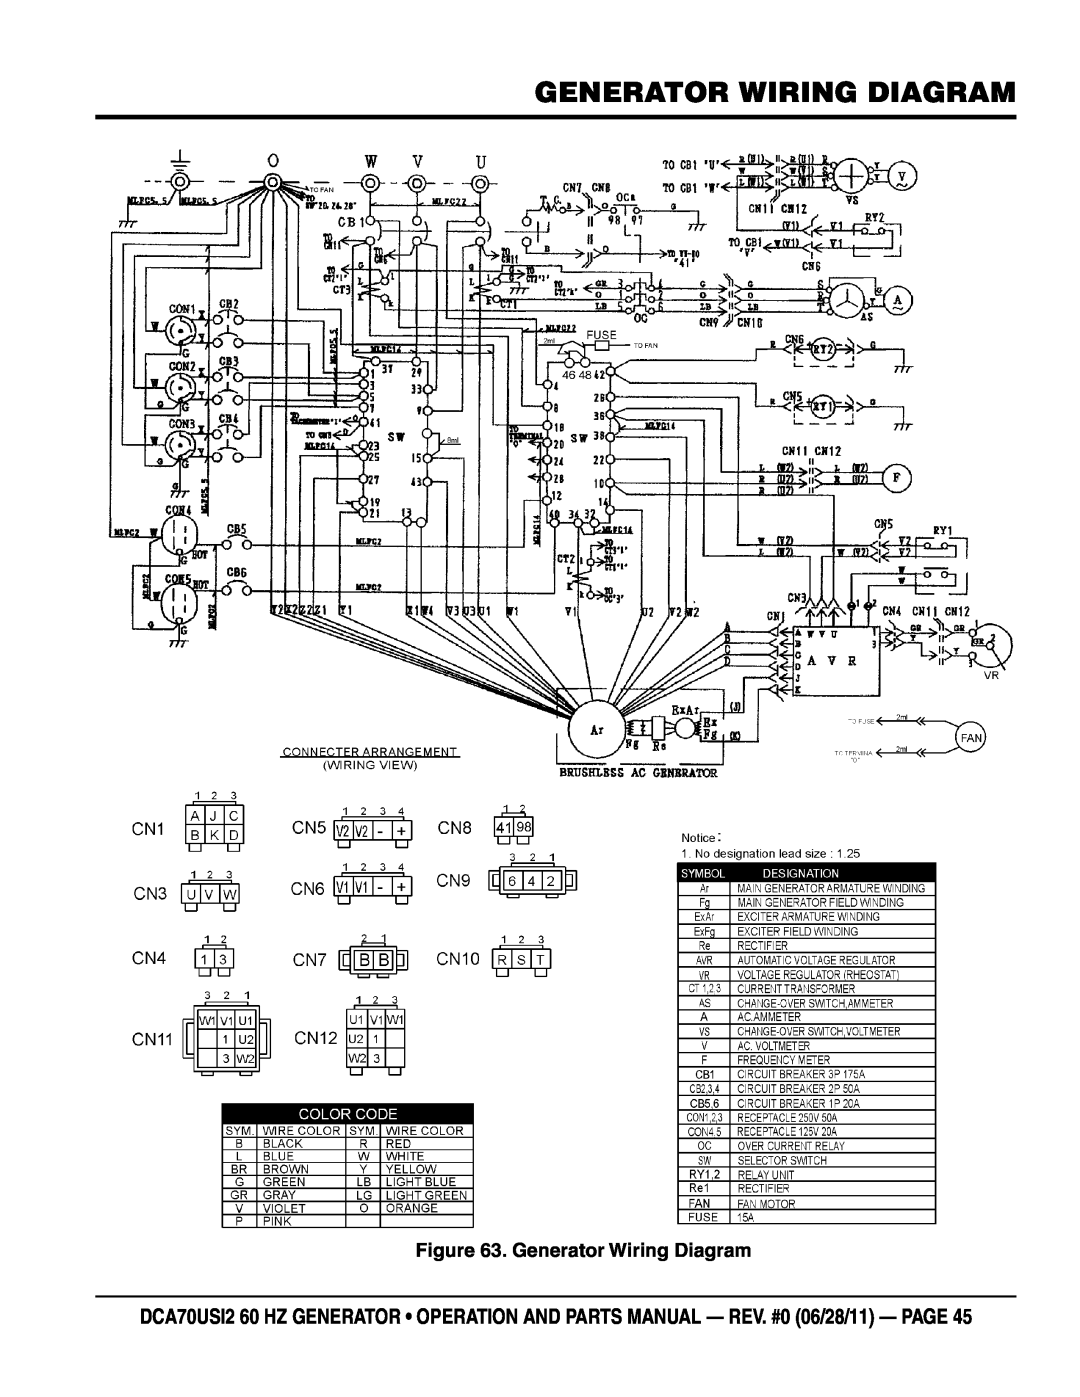 Multiquip DCA70USI2 manual Generator Wiring Diagram 